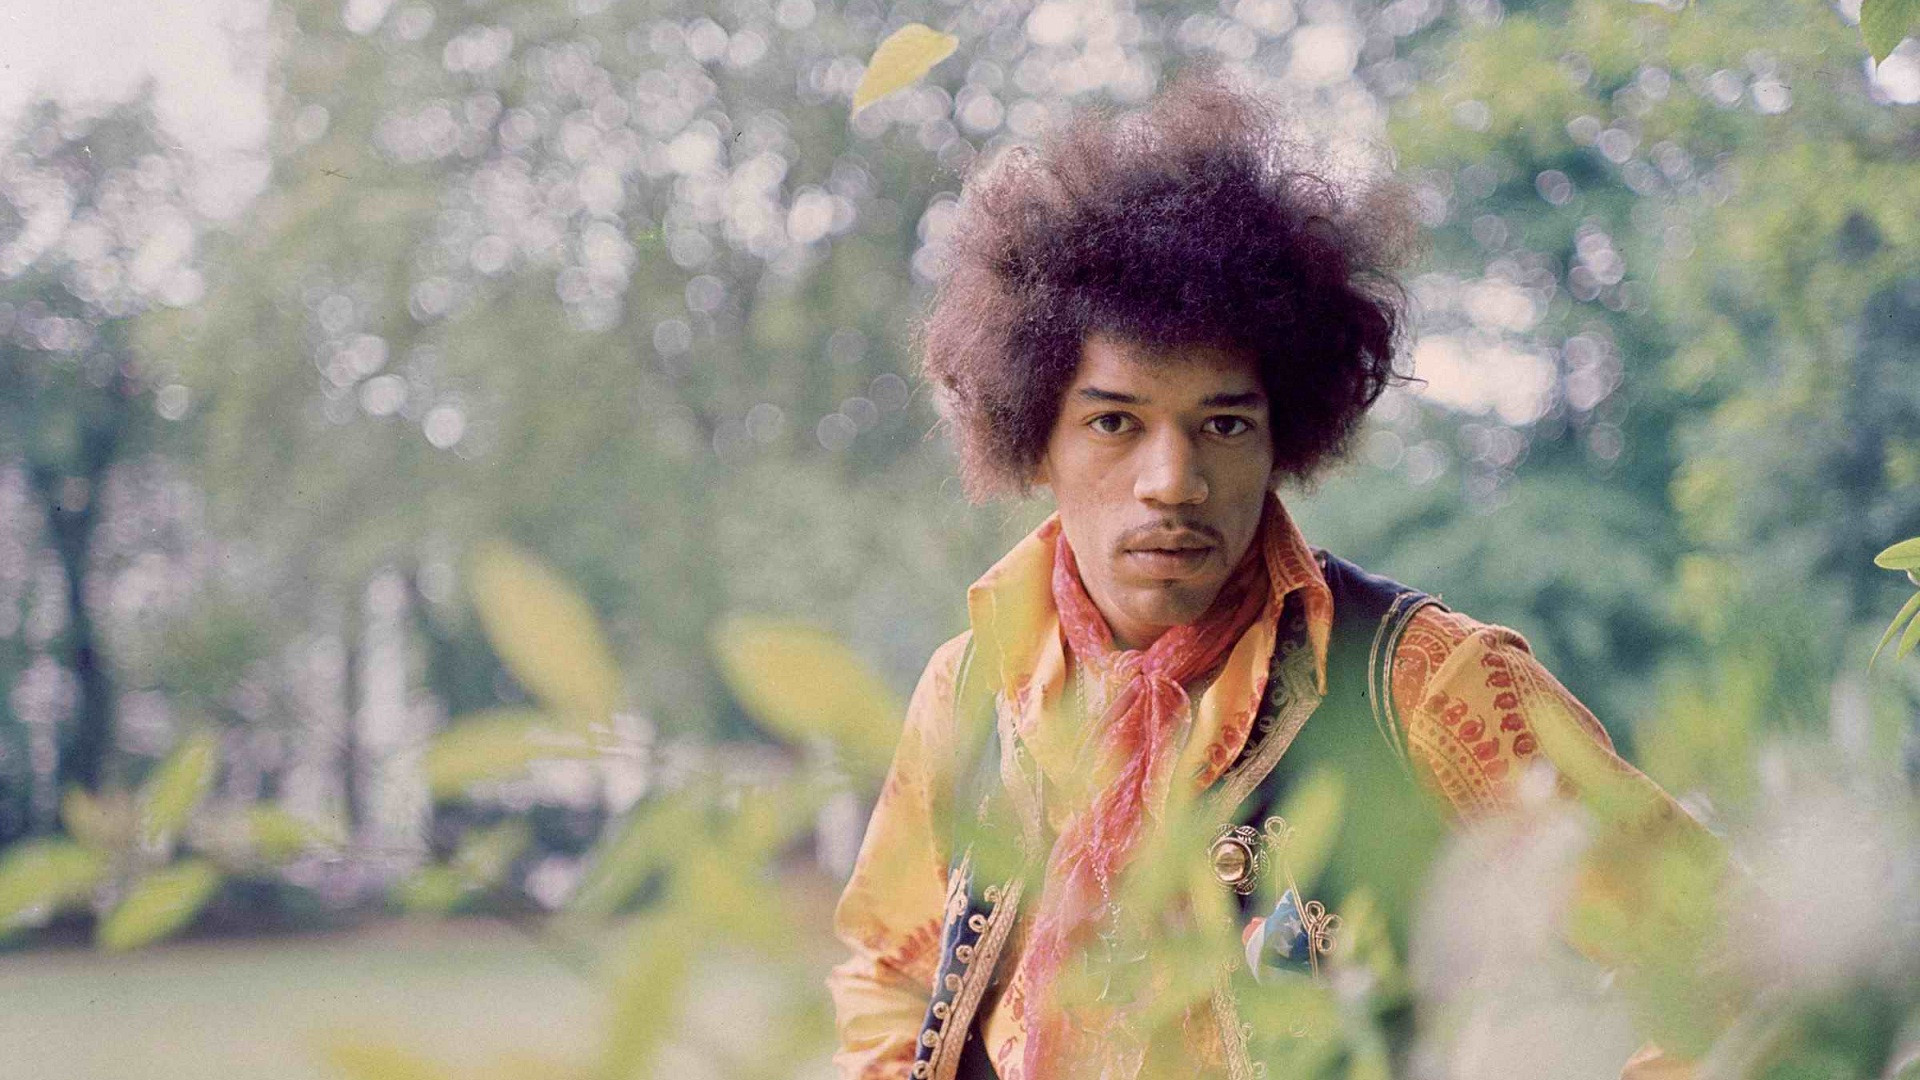 Jimi Hendrix Wallpapers